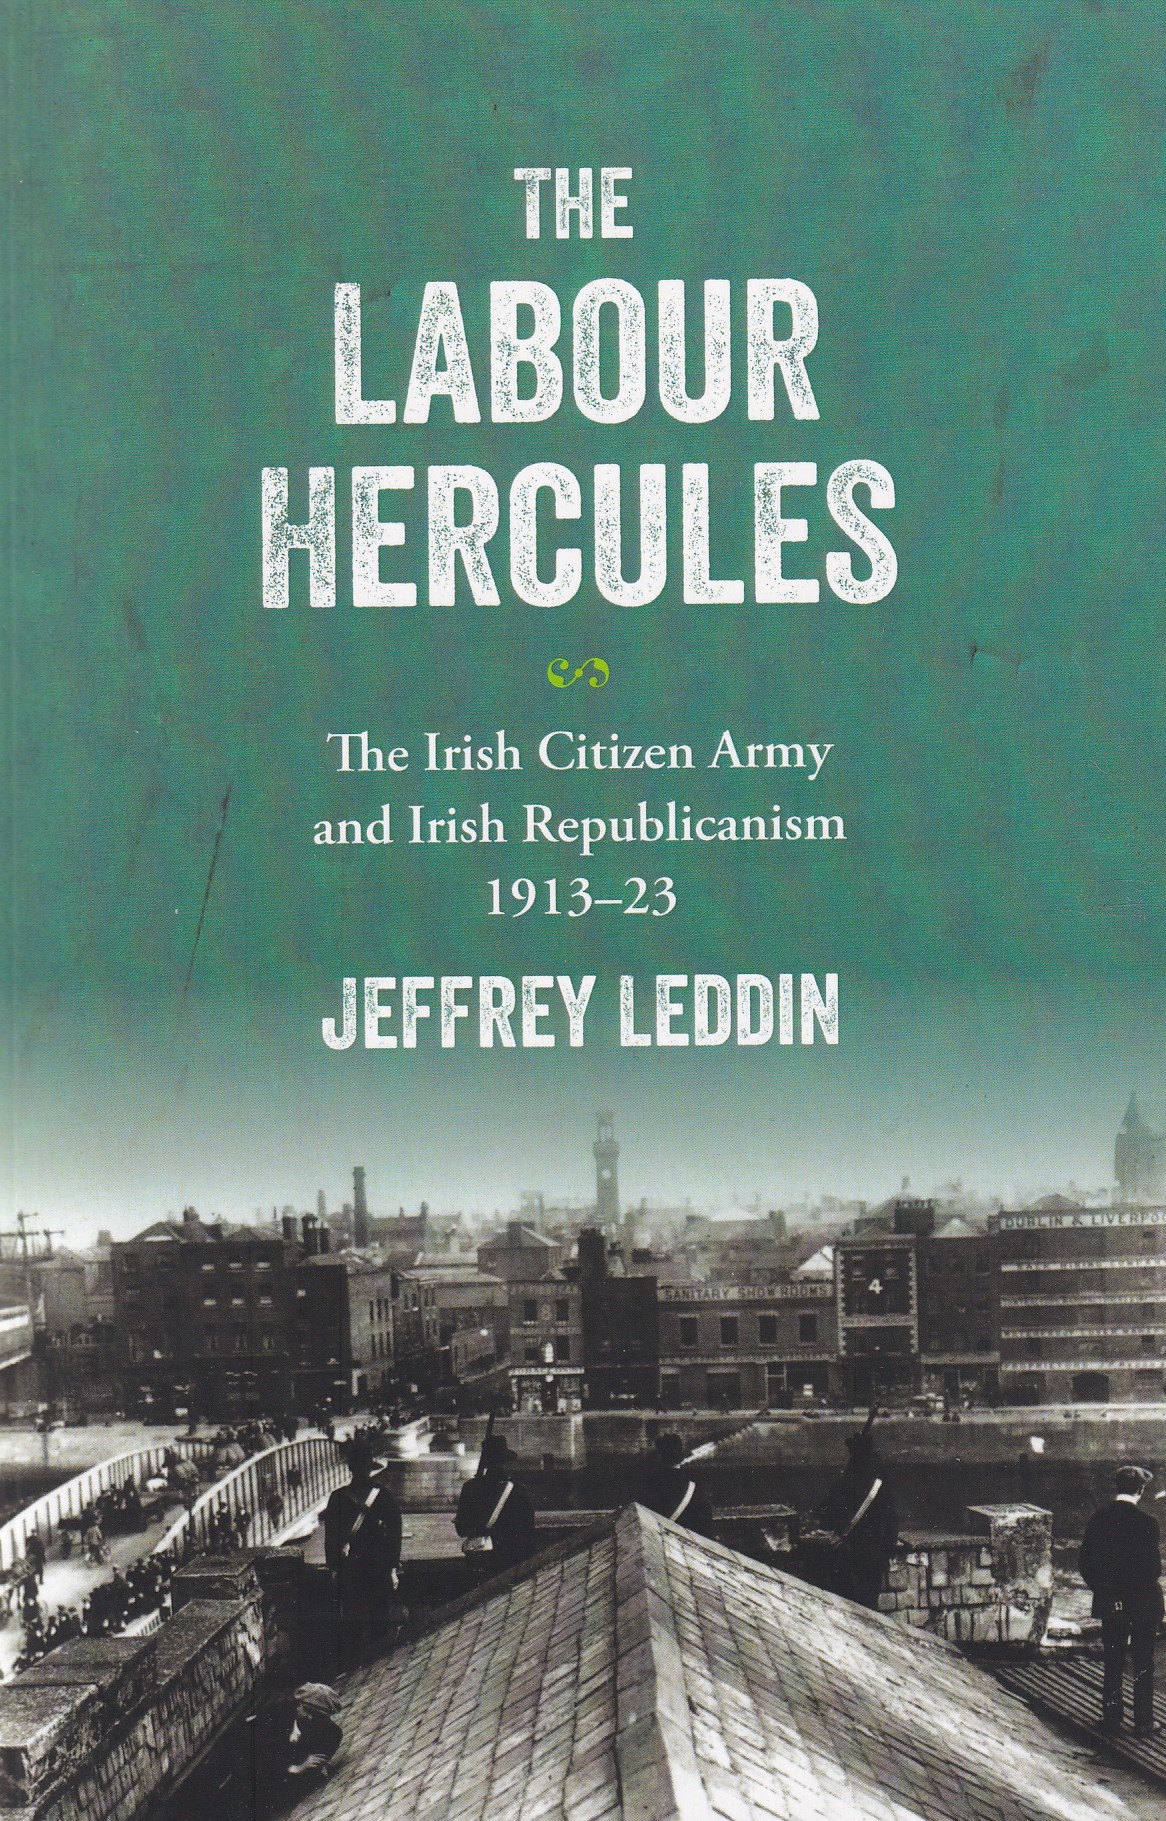 The ‘Labour Hercules’: The Irish Citizen Army and Irish Republicanism, 1913-23 by Jeffrey Leddin